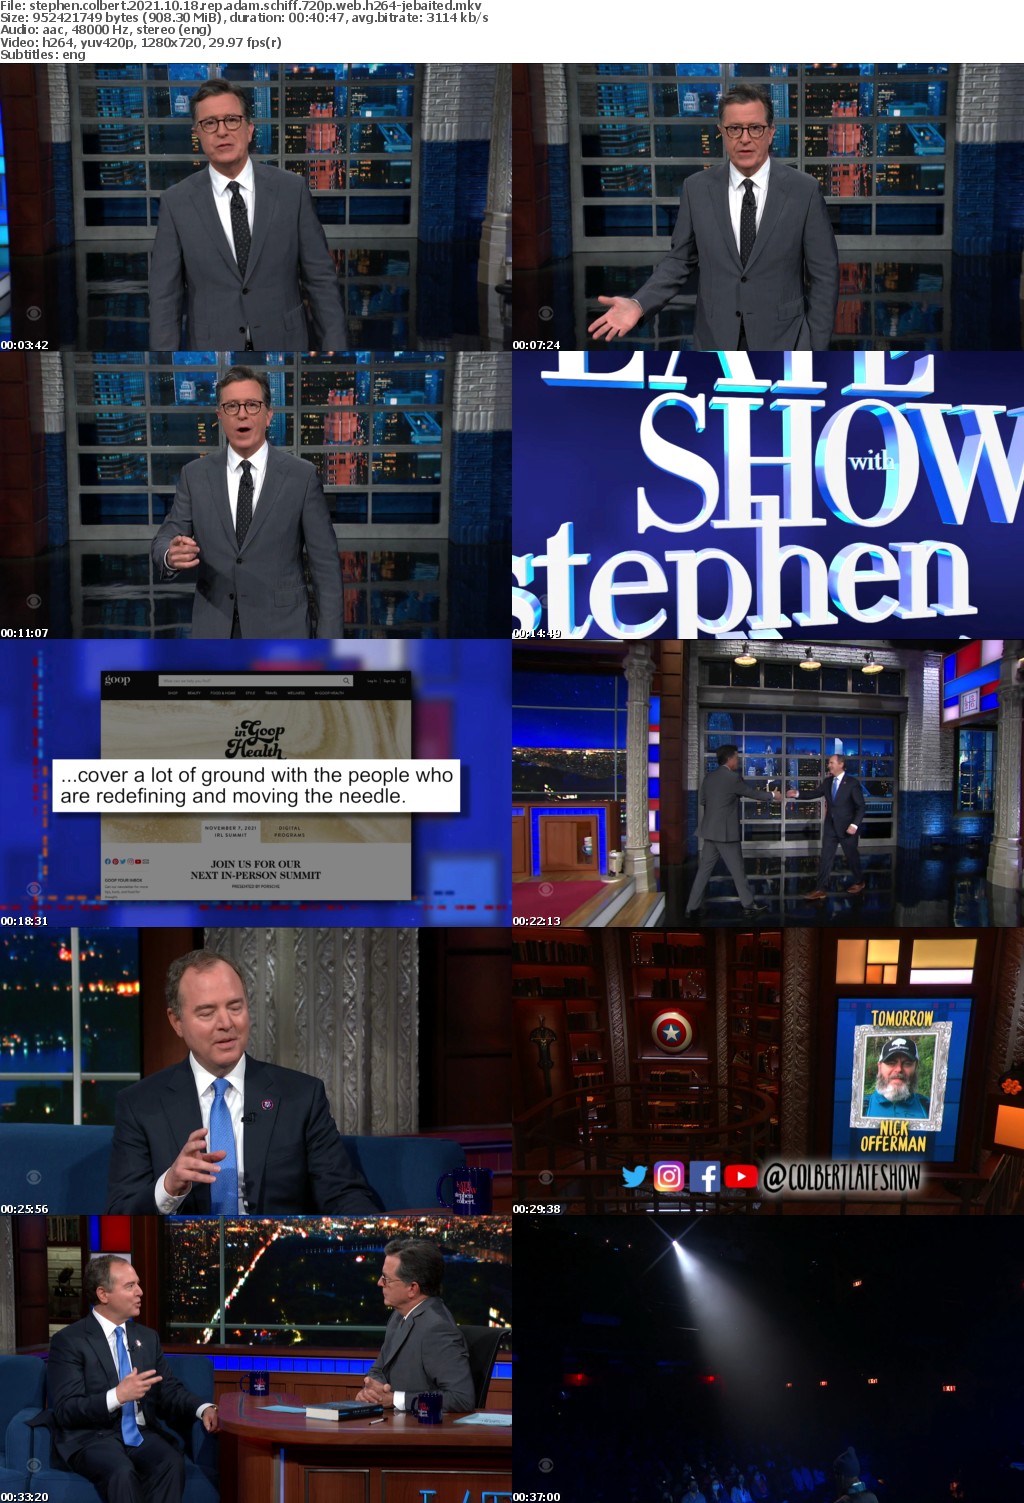 Stephen Colbert 2021 10 18 Rep Adam Schiff 720p WEB H264-JEBAITED